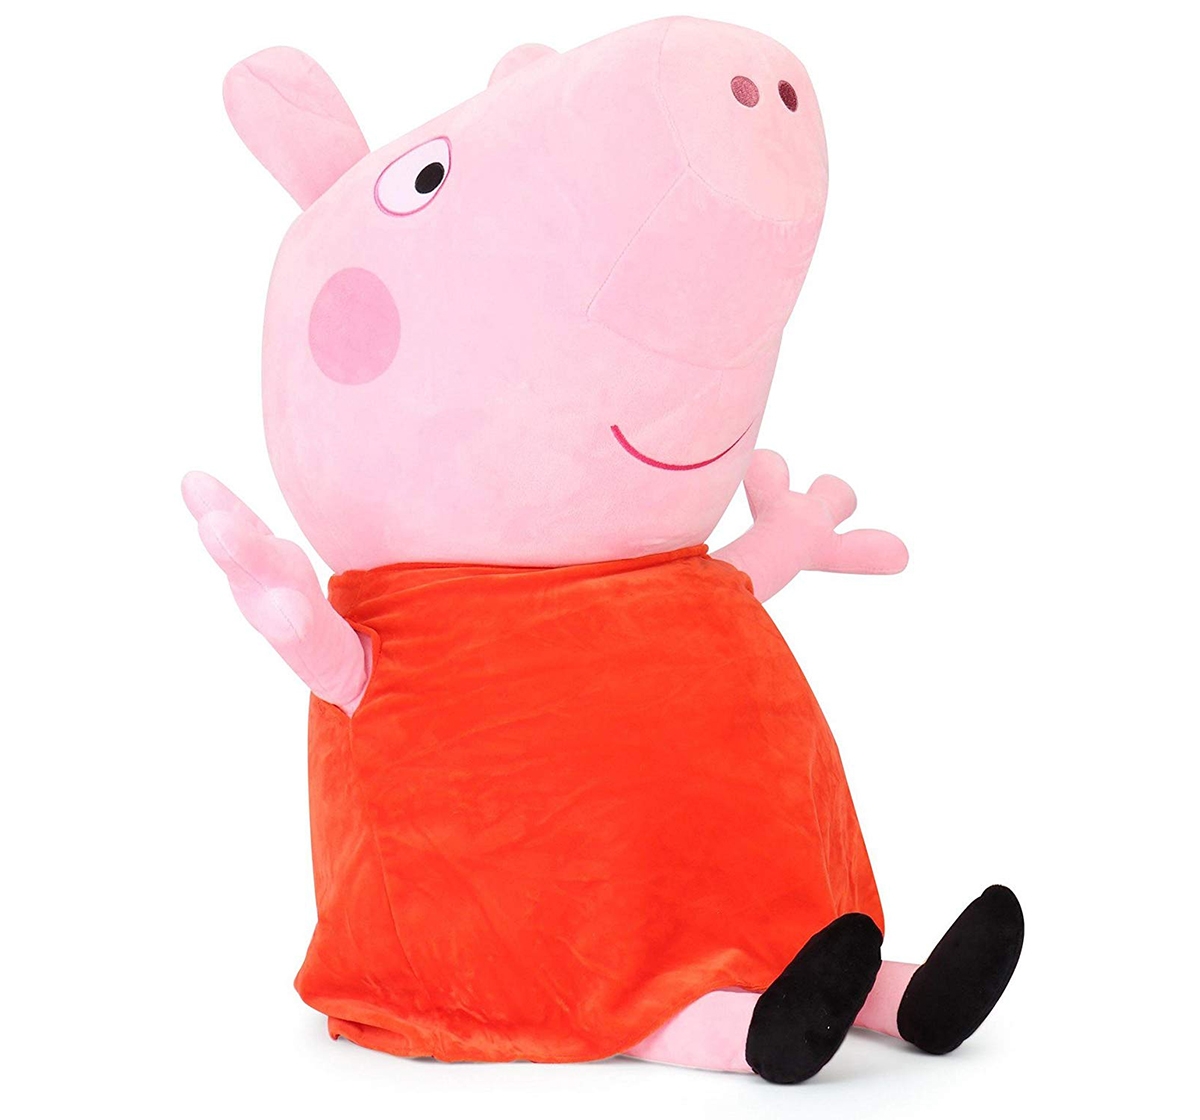 Peppa Pig | Peppa George Pig  Multi Color 46 Cm Soft Toy for Kids age 0M+ (Orange)